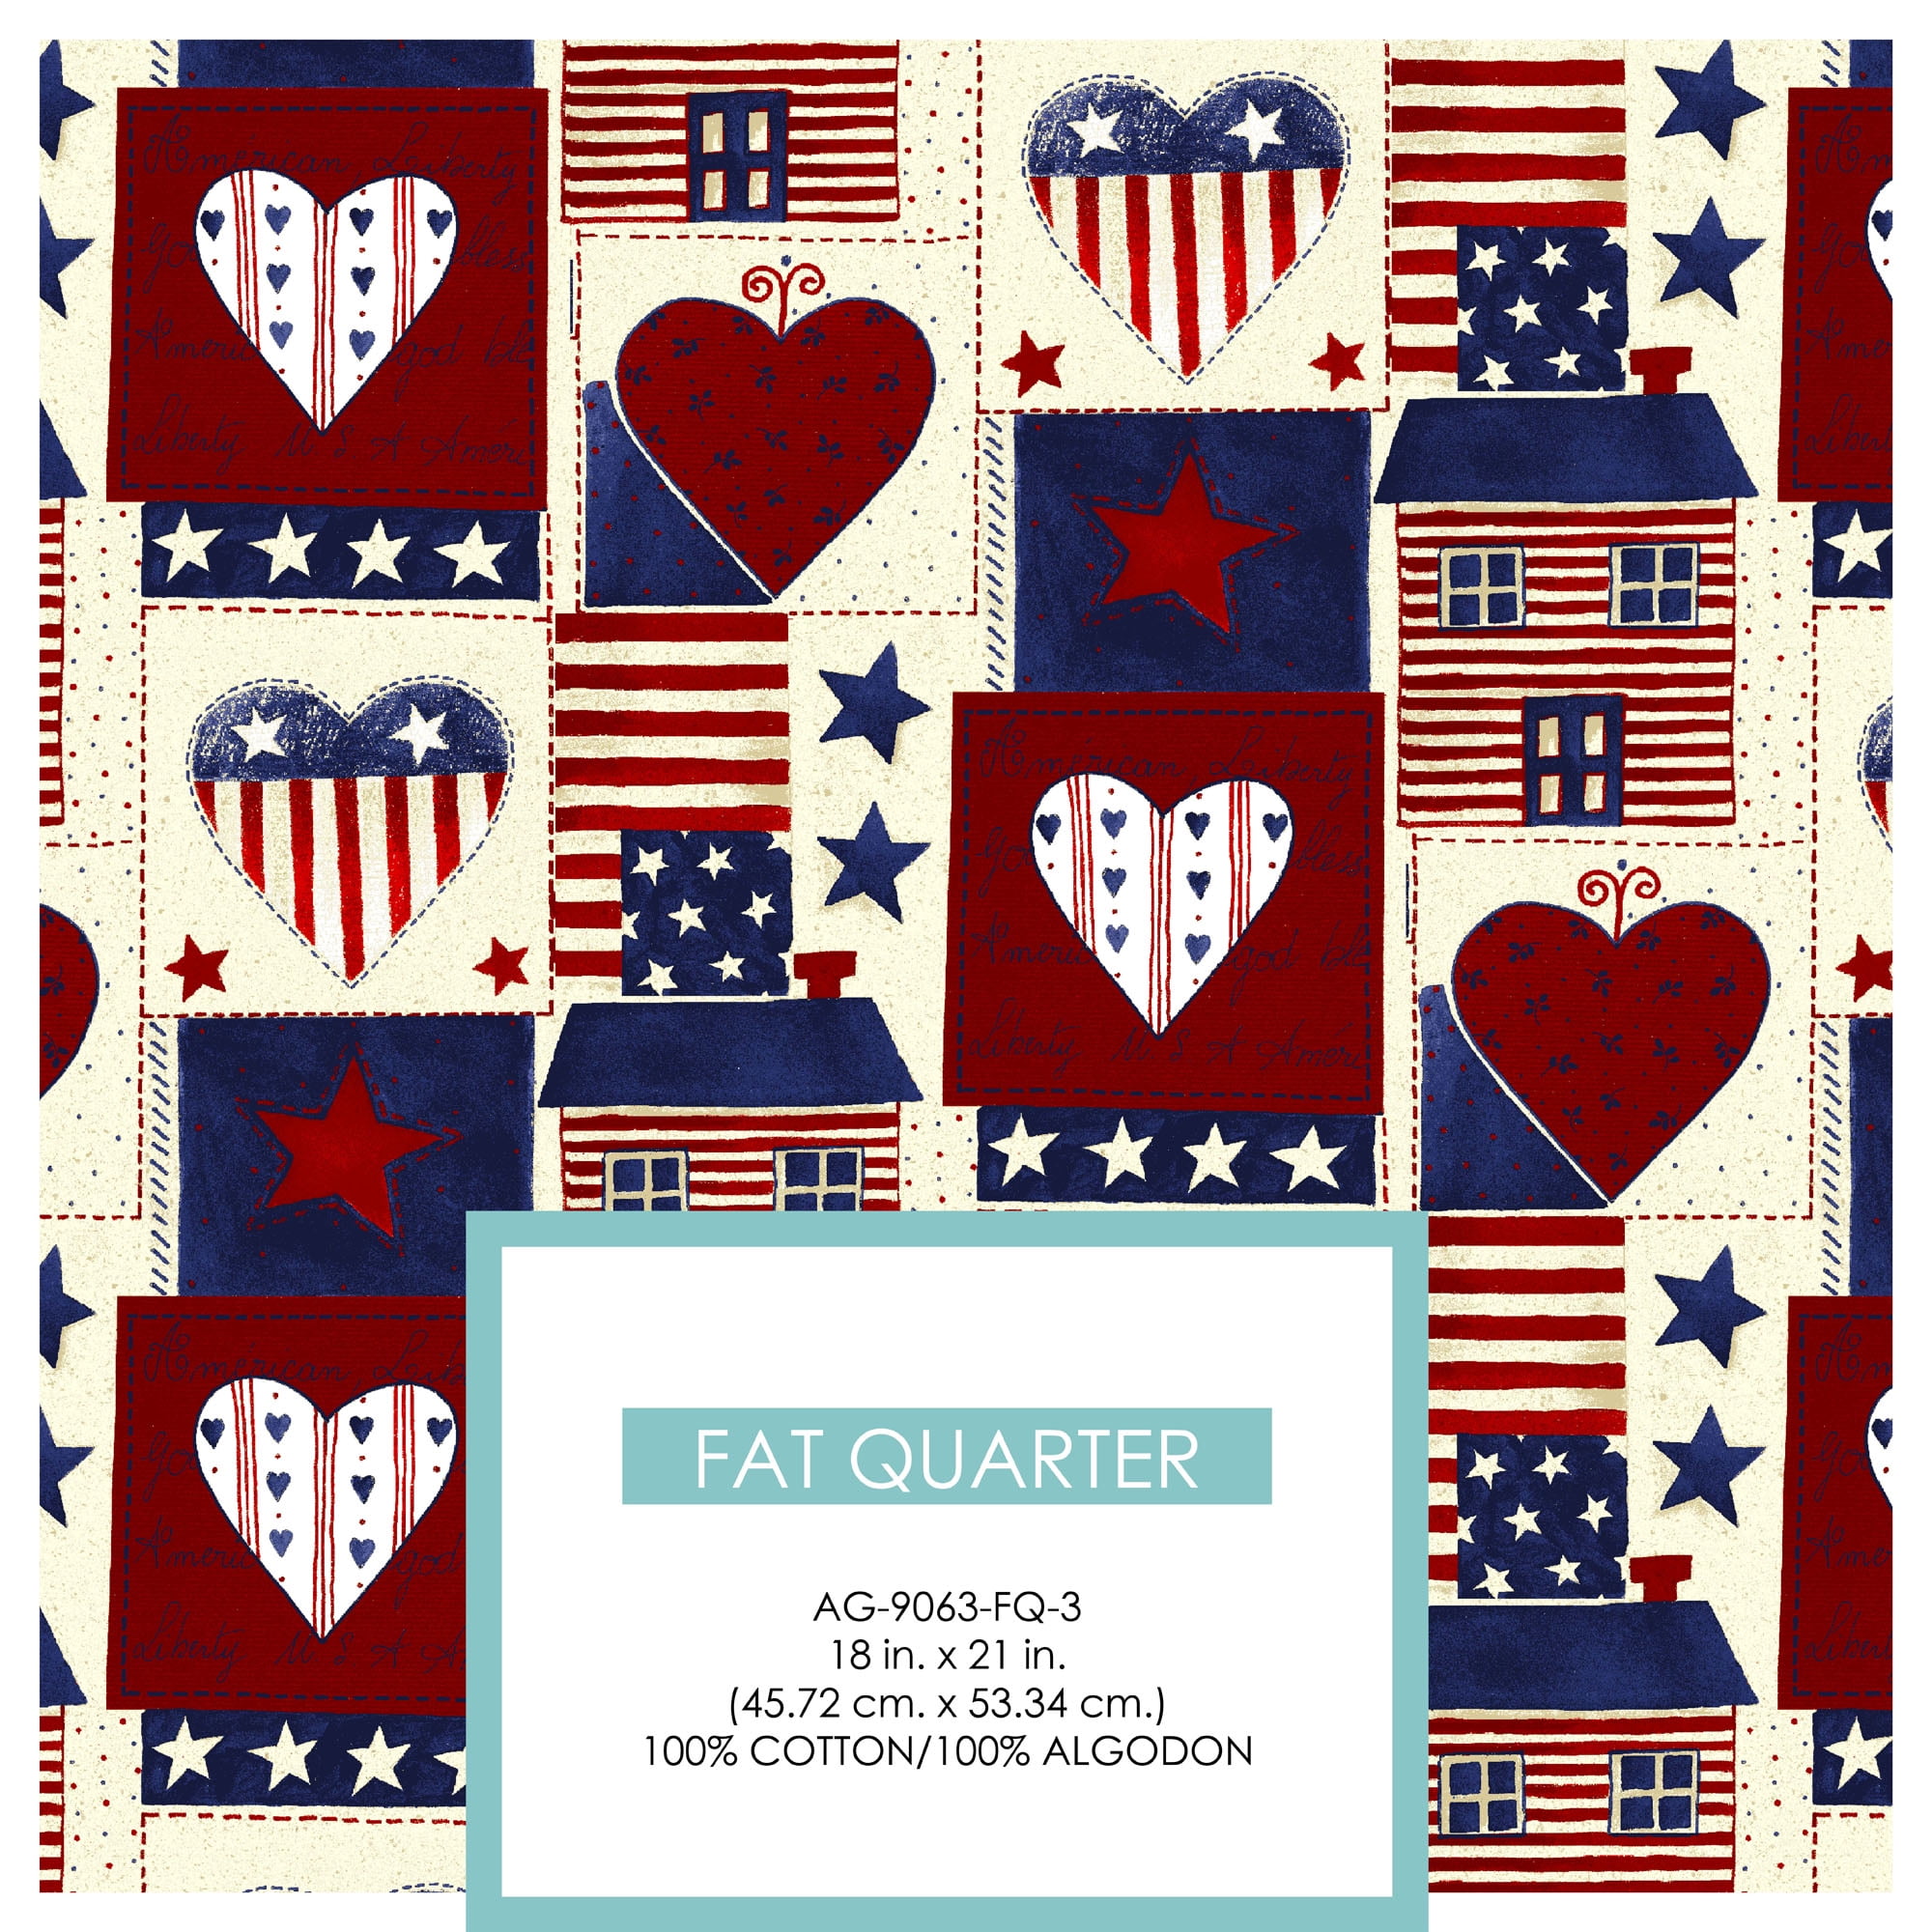 David Textiles, Inc. 22" x 18" 100% Cotton Americana Heart Precut Sewing & Craft Fabric, Red|Blue|Multi-color